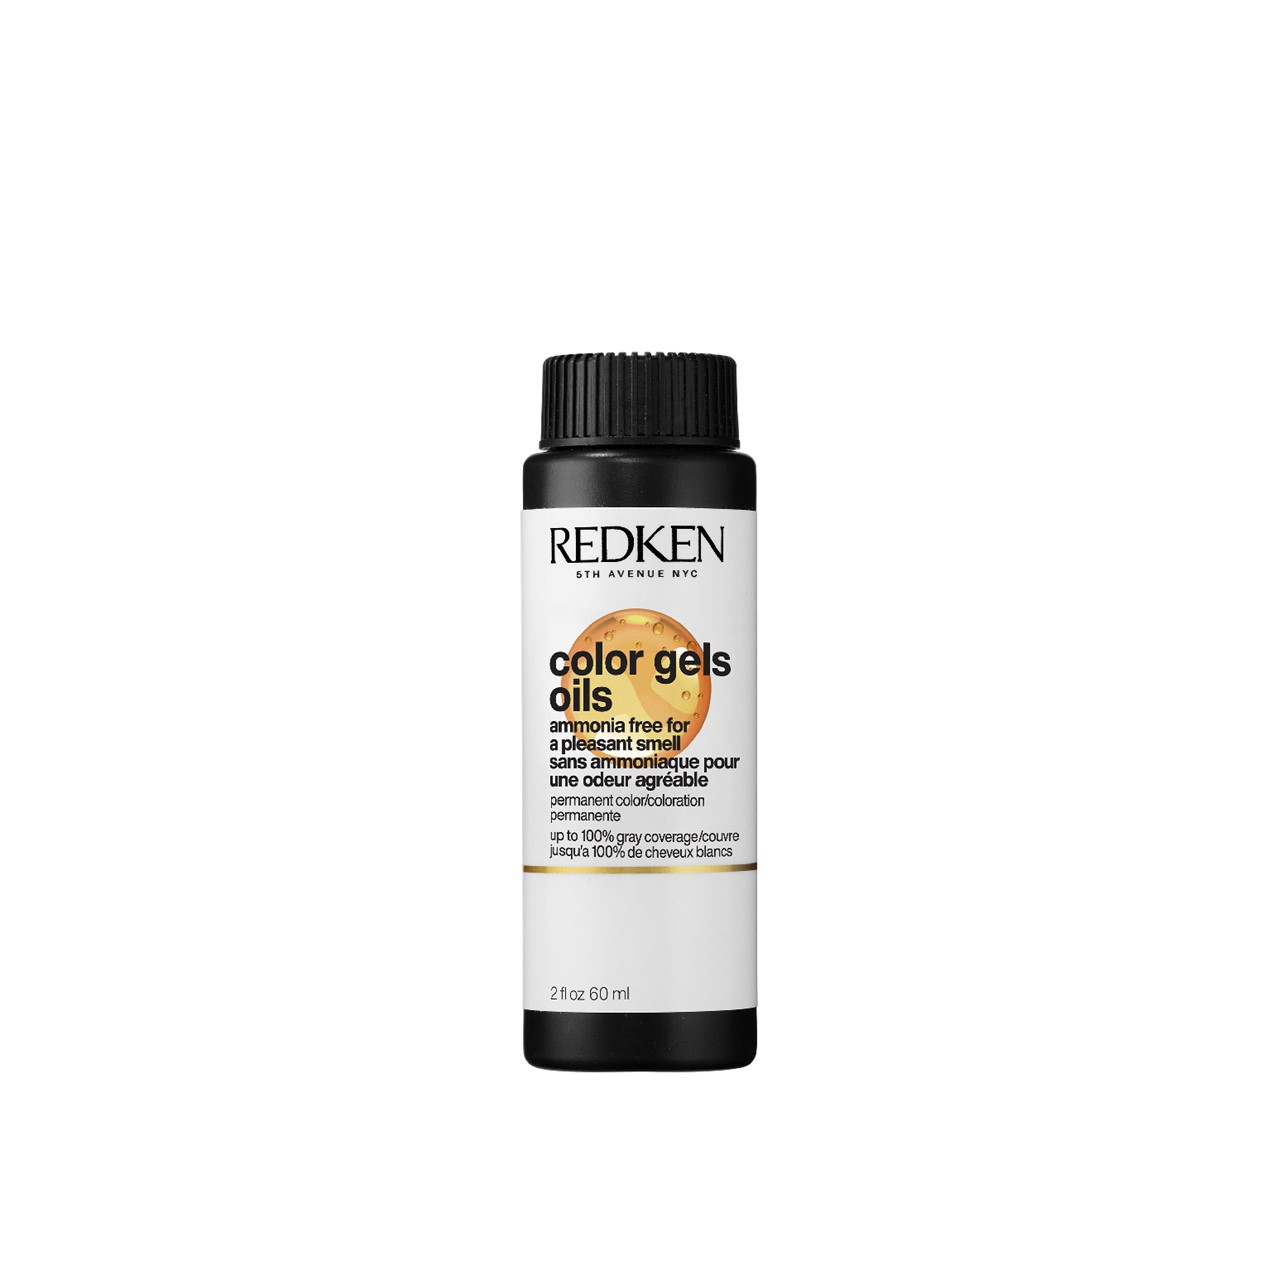 Redken Color Gels Oils 6AB Azurite Permanent Hair Dye 60ml (2.03 fl oz)